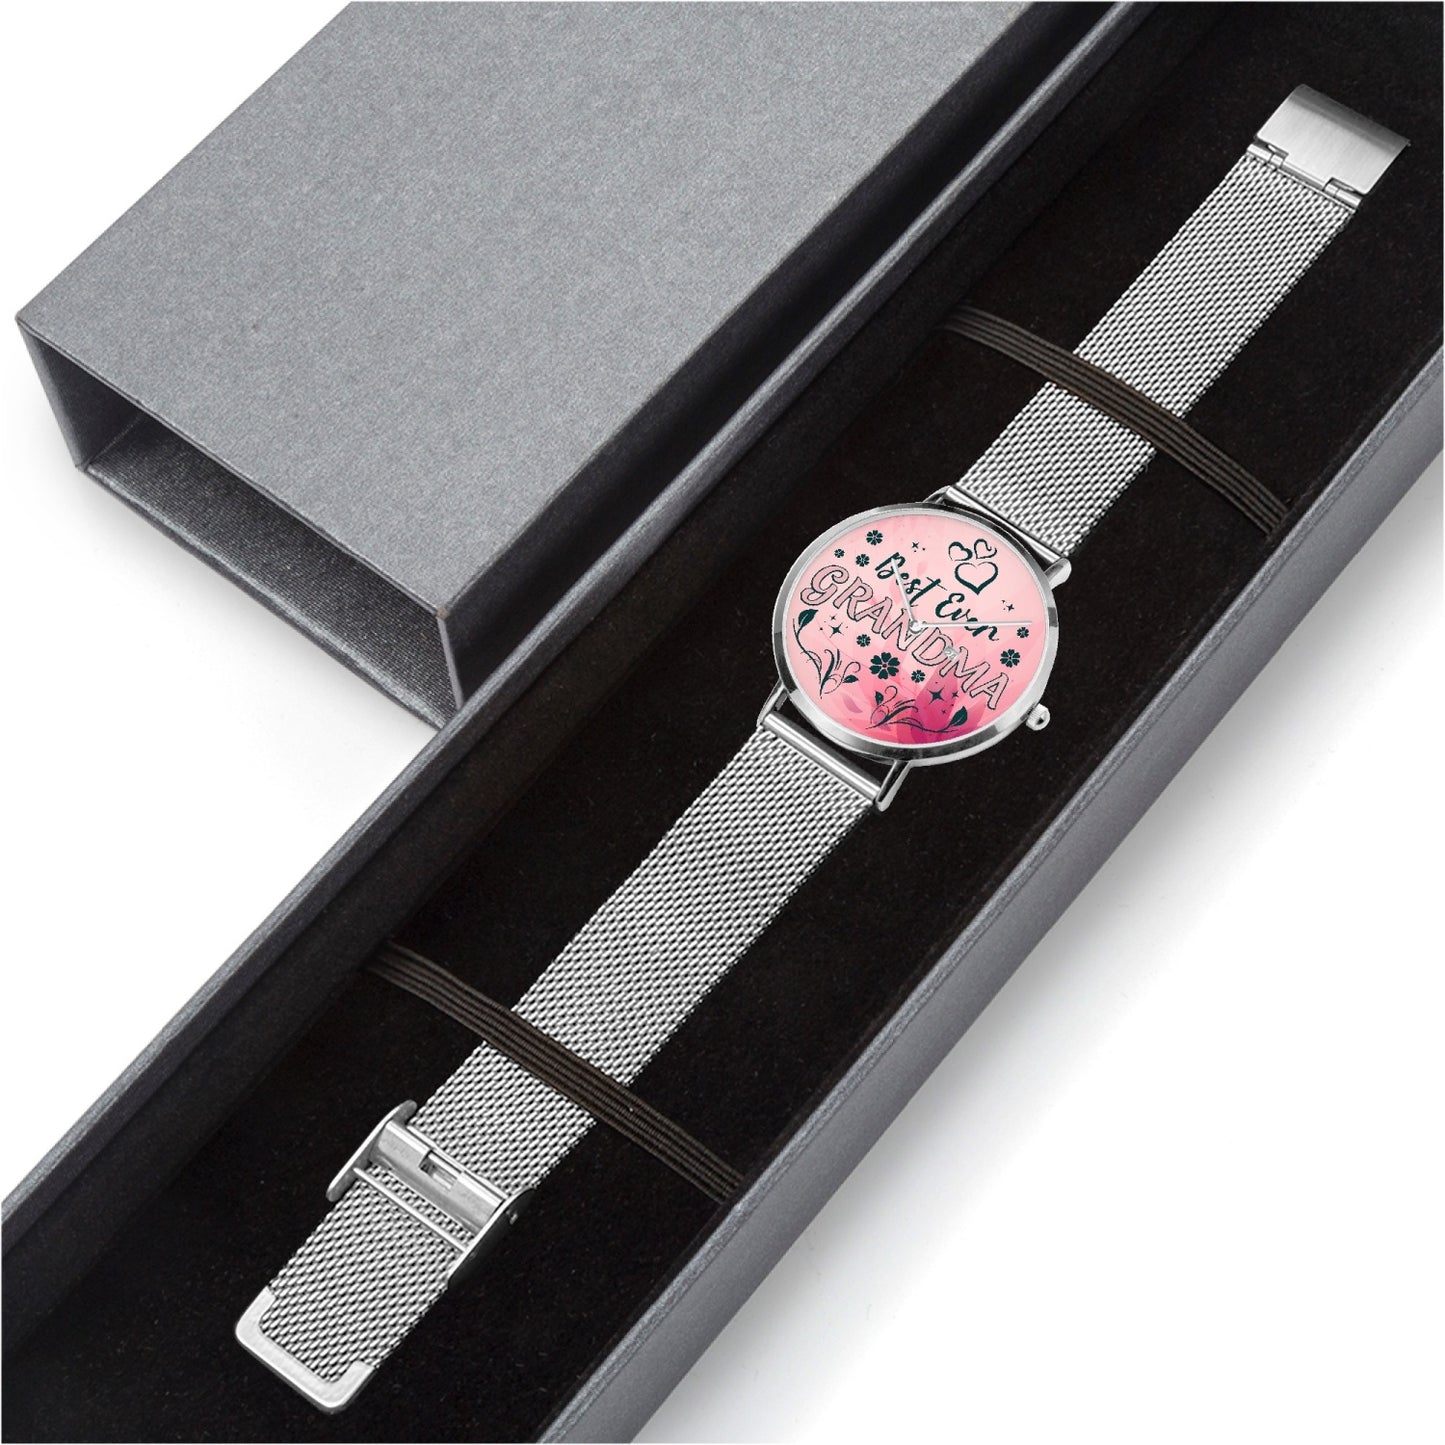 Grandma - Best Ever Women's Fashion Ultra Thin Steel Strap Quartz Watch With Date